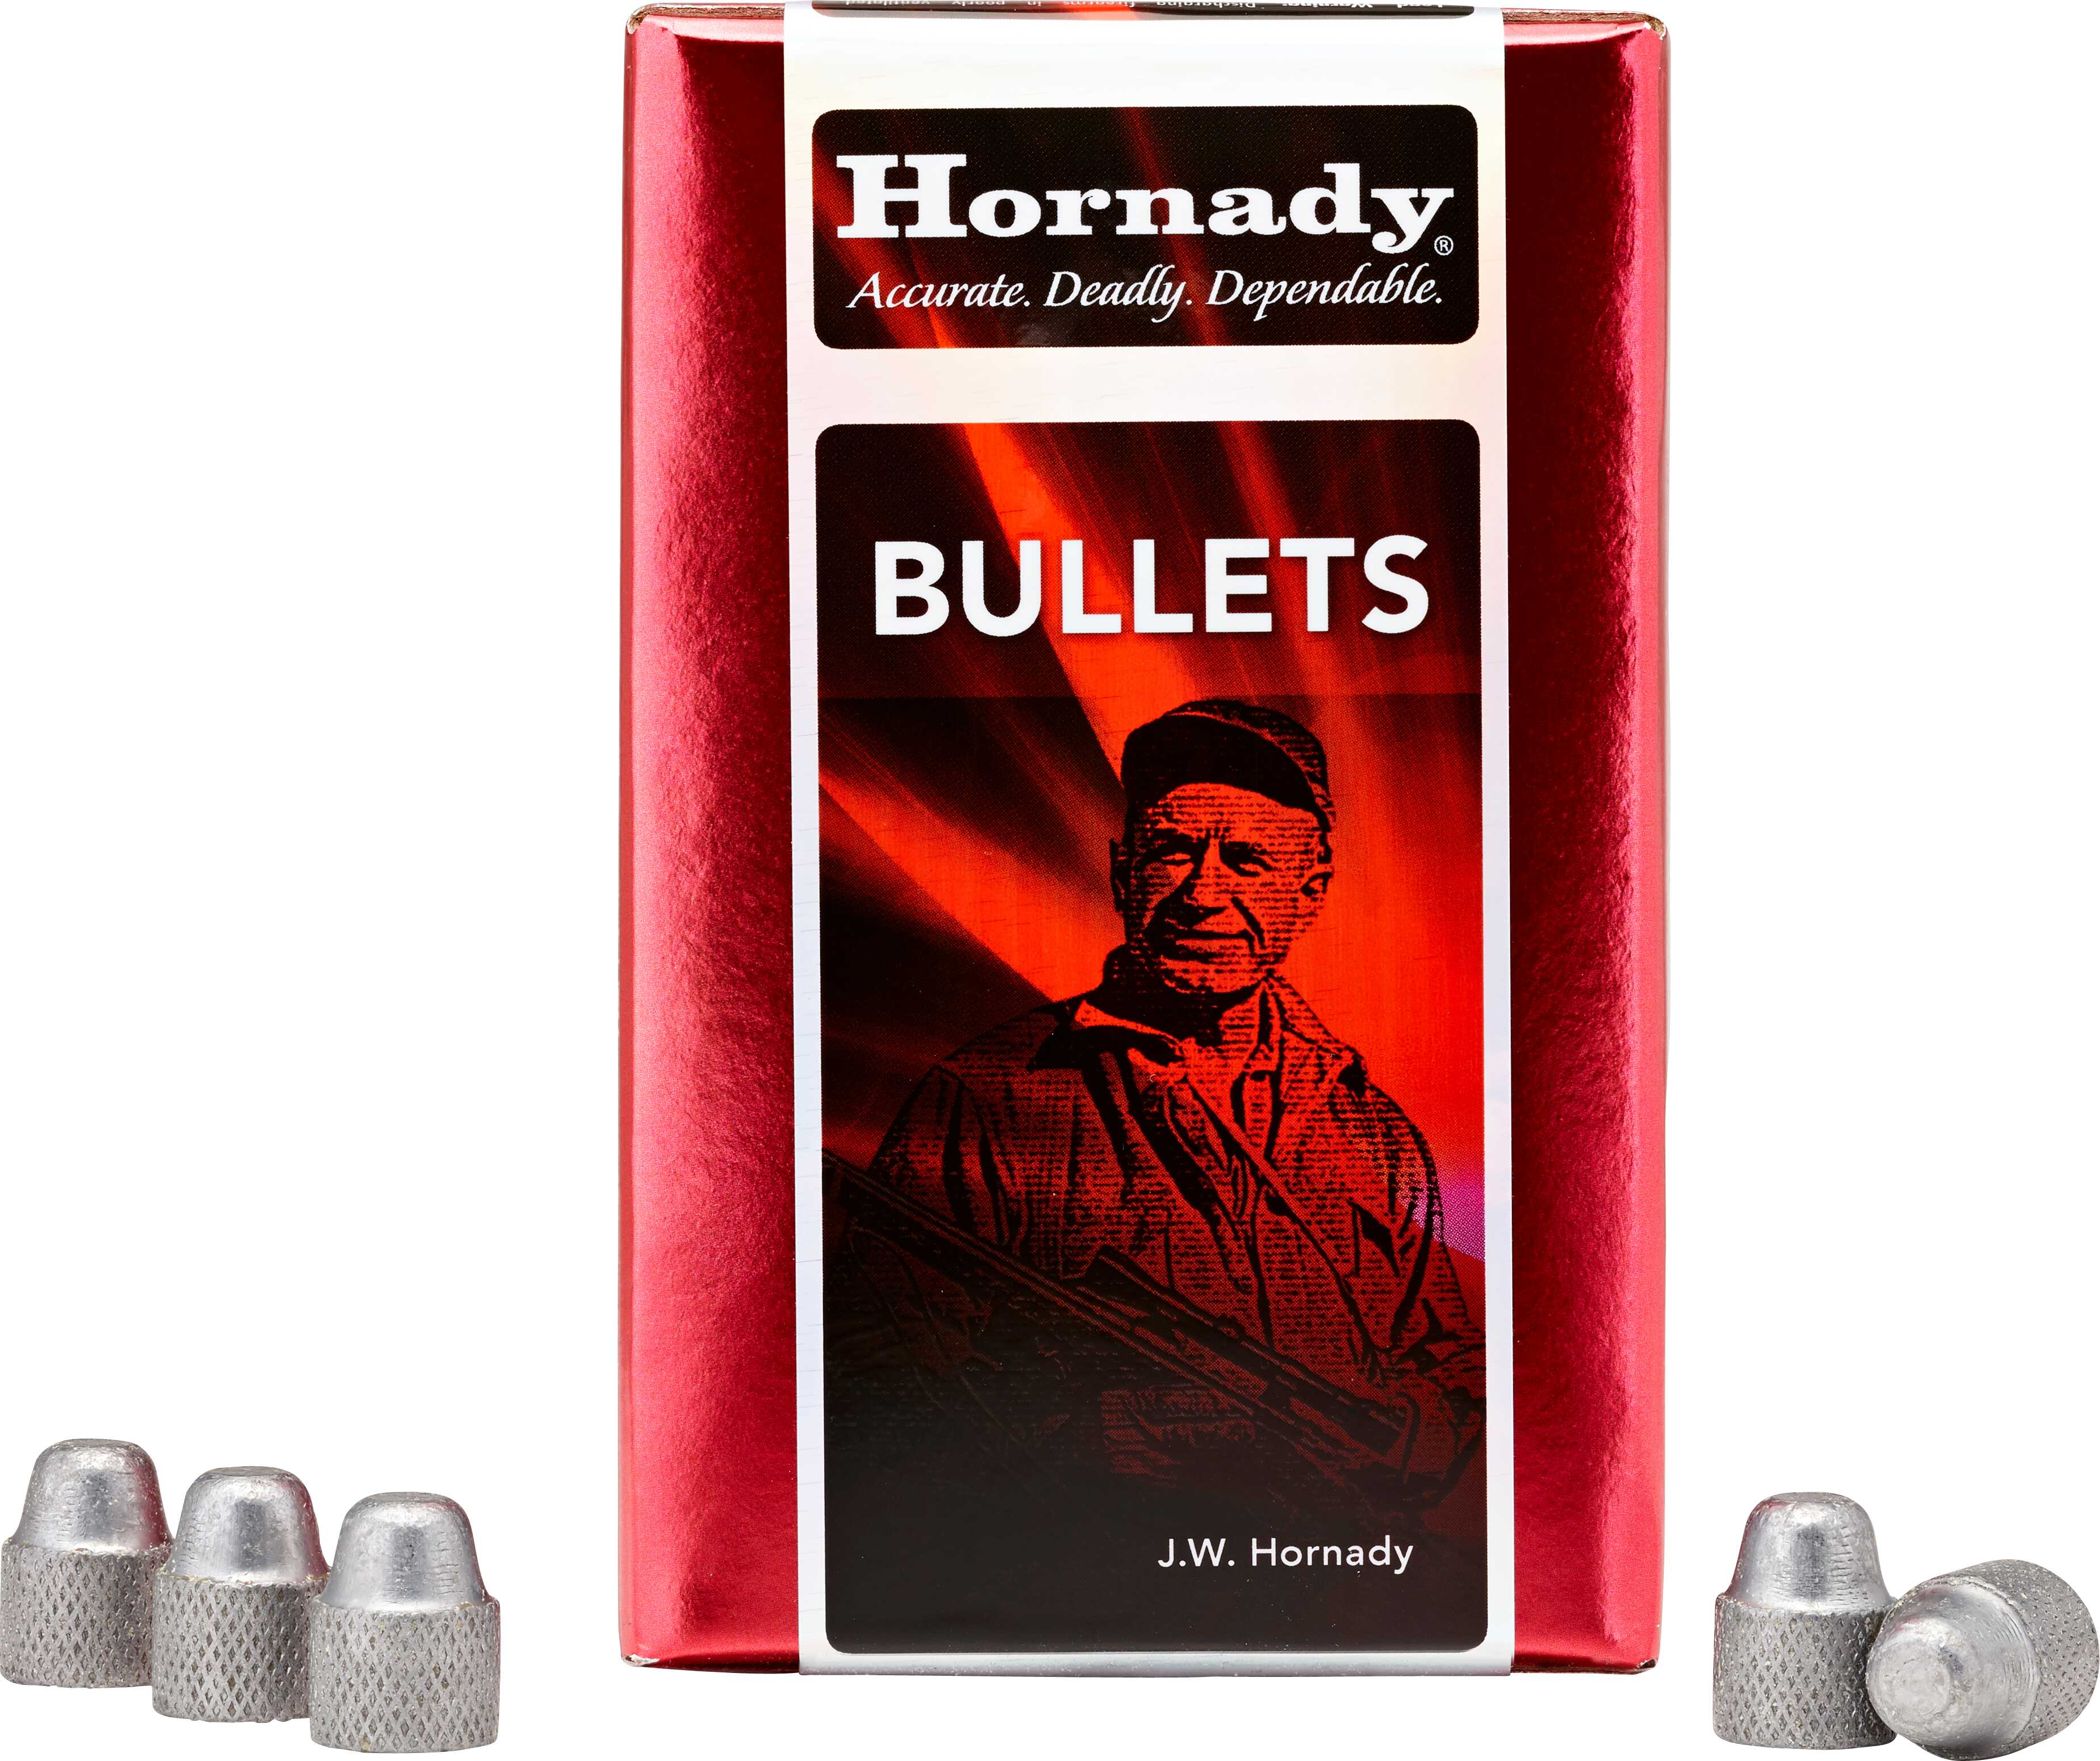 Hornady Bullets 38 Caliber .358 148 Grain Lead HBWC 250CT